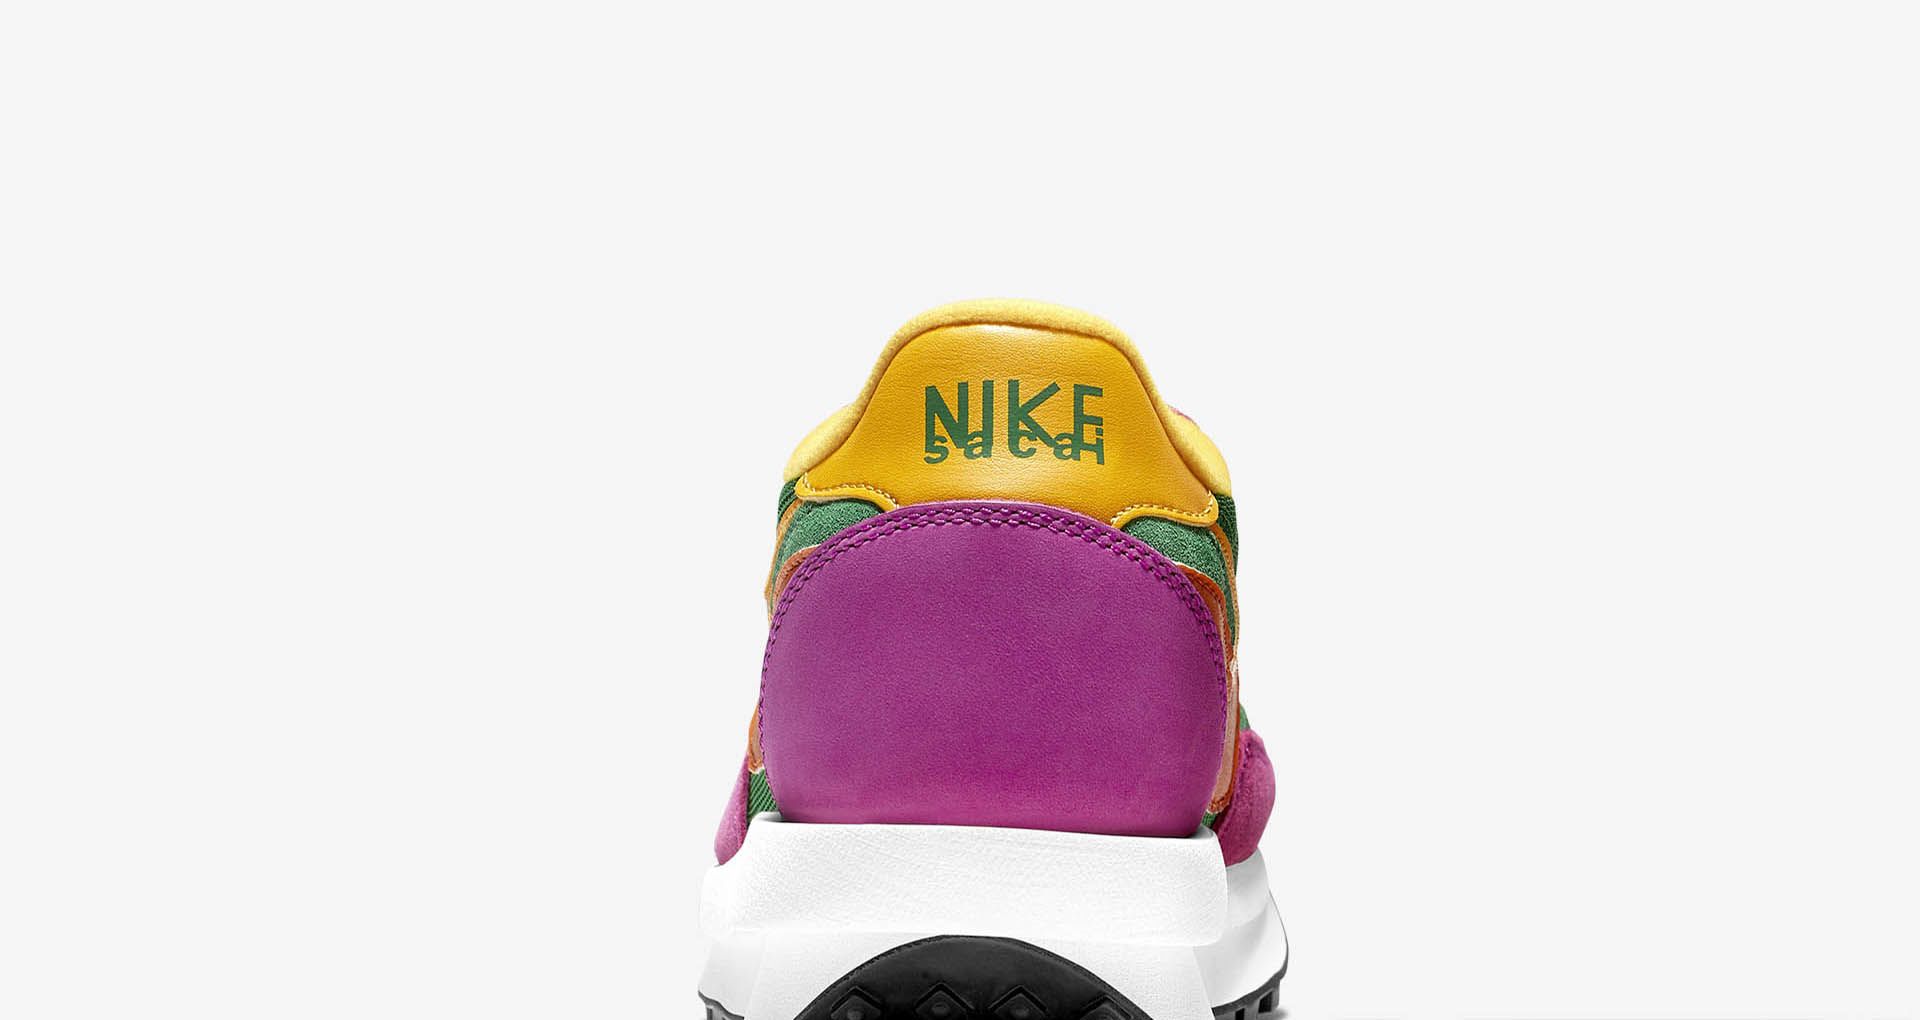 sacai x Nike LDWaffle 'Pine Green' Release Date. Nike SNKRS ID